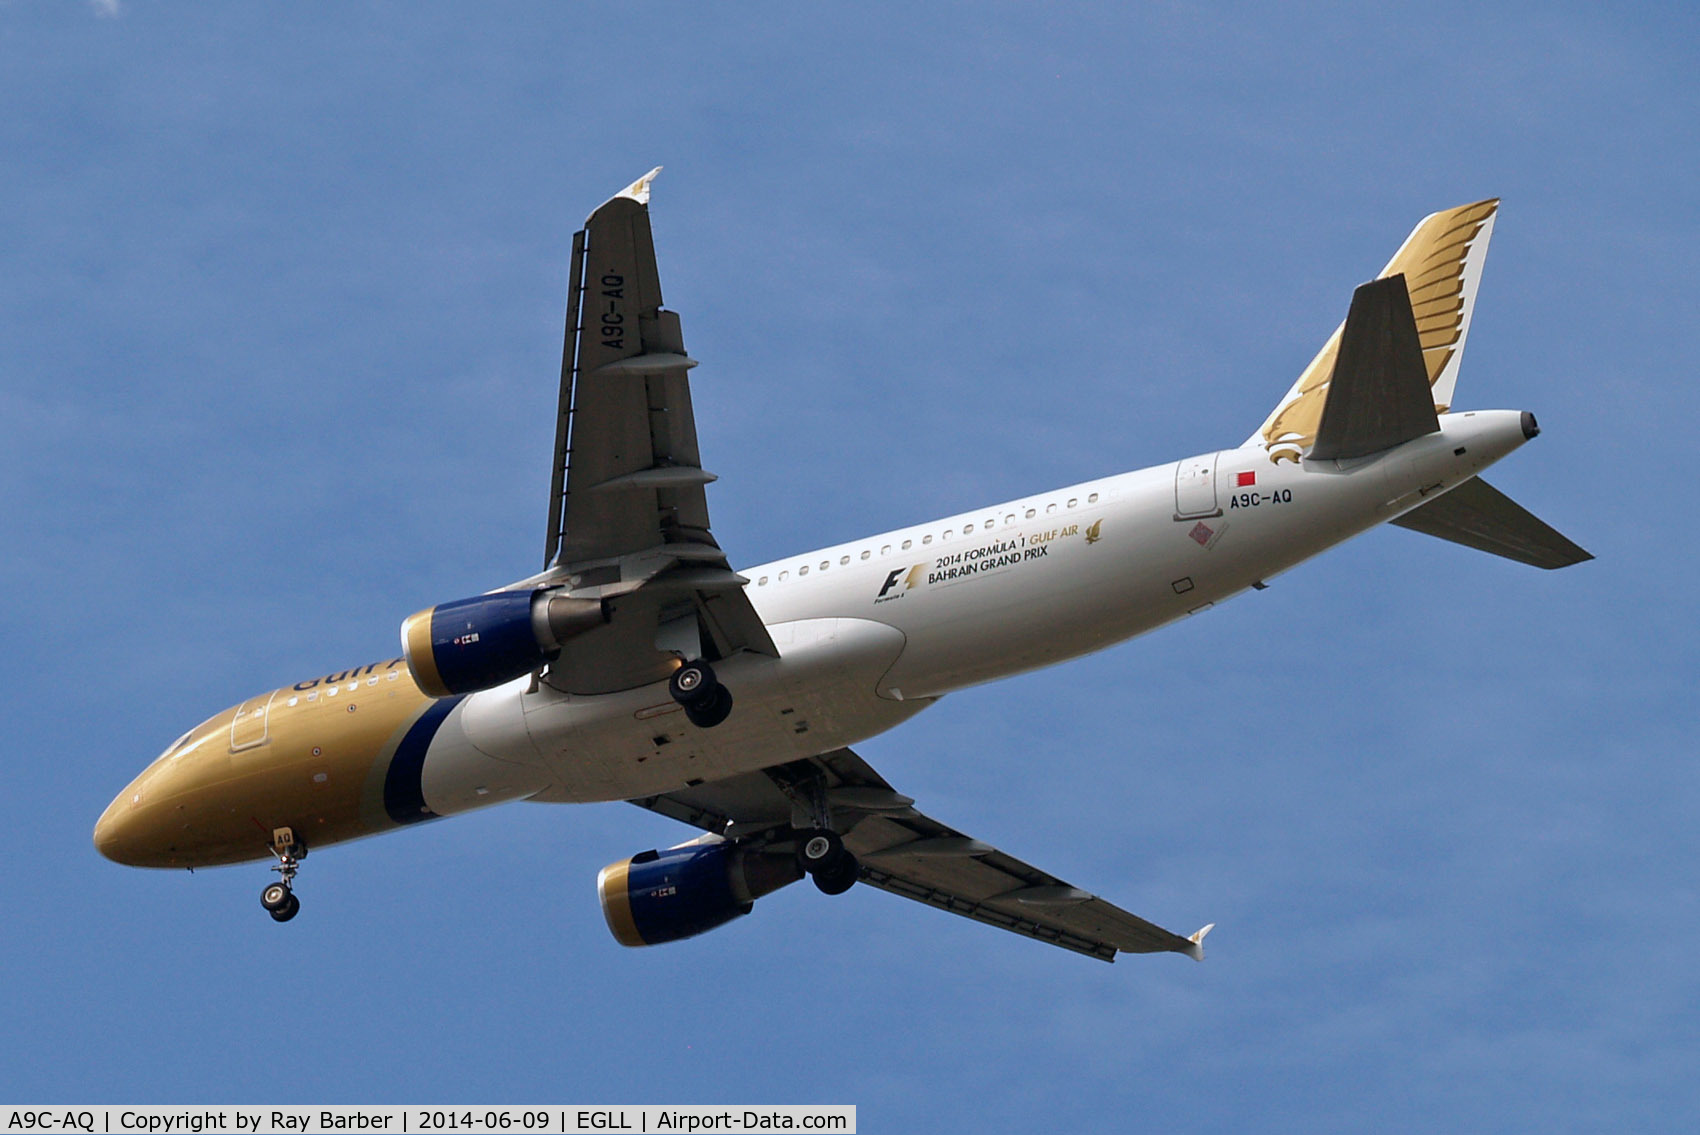 A9C-AQ, 2012 Airbus A320-214 C/N 5175, Airbus A320-214 [5175] (Gulf Air) Home~G 09/06/2014. On approach 27R.